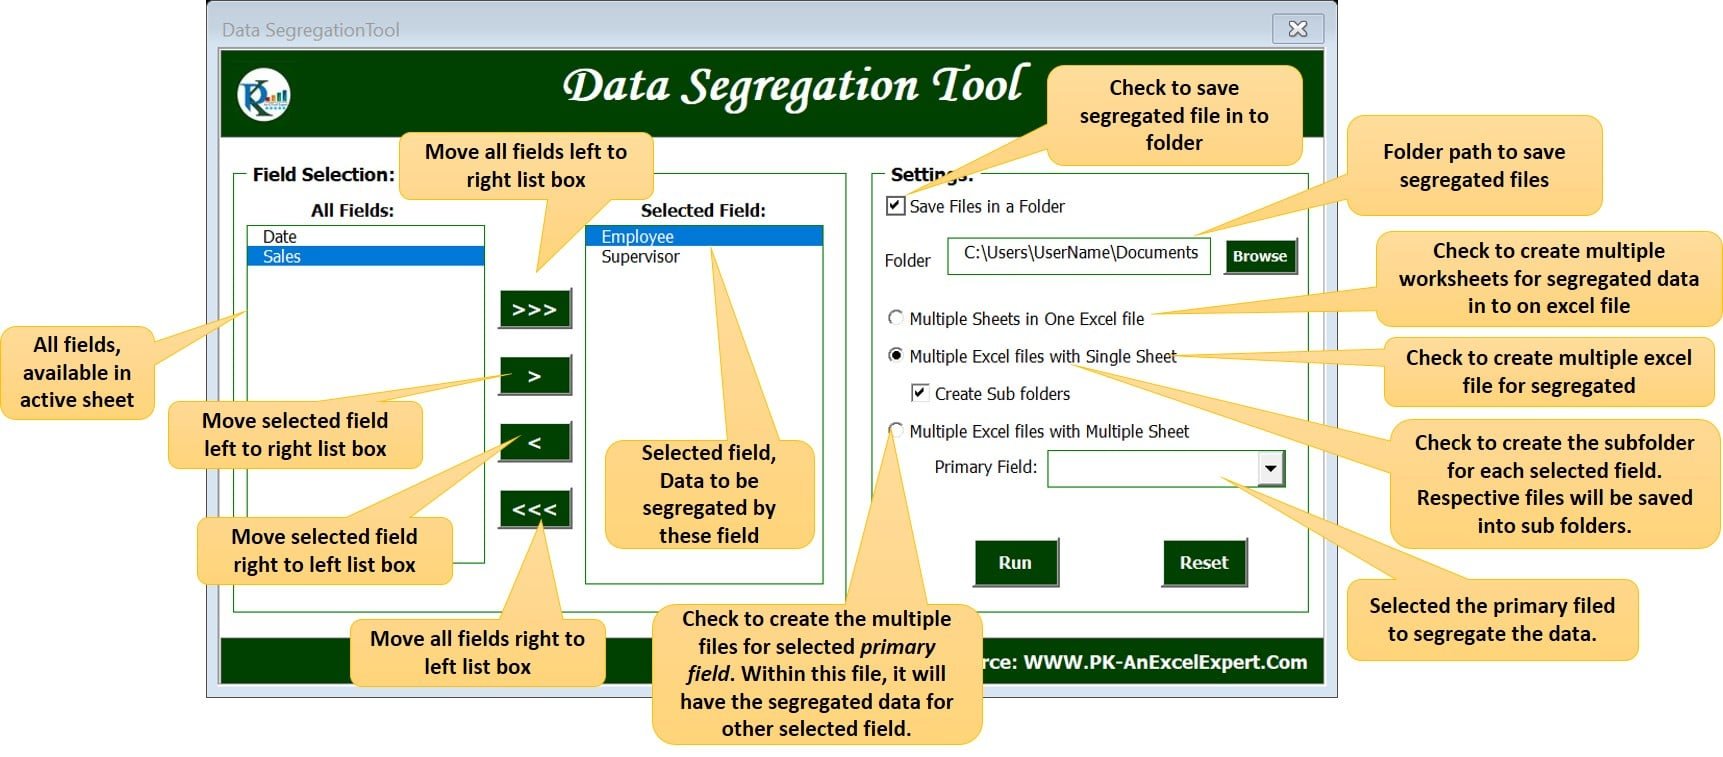 Data Segregation Tool